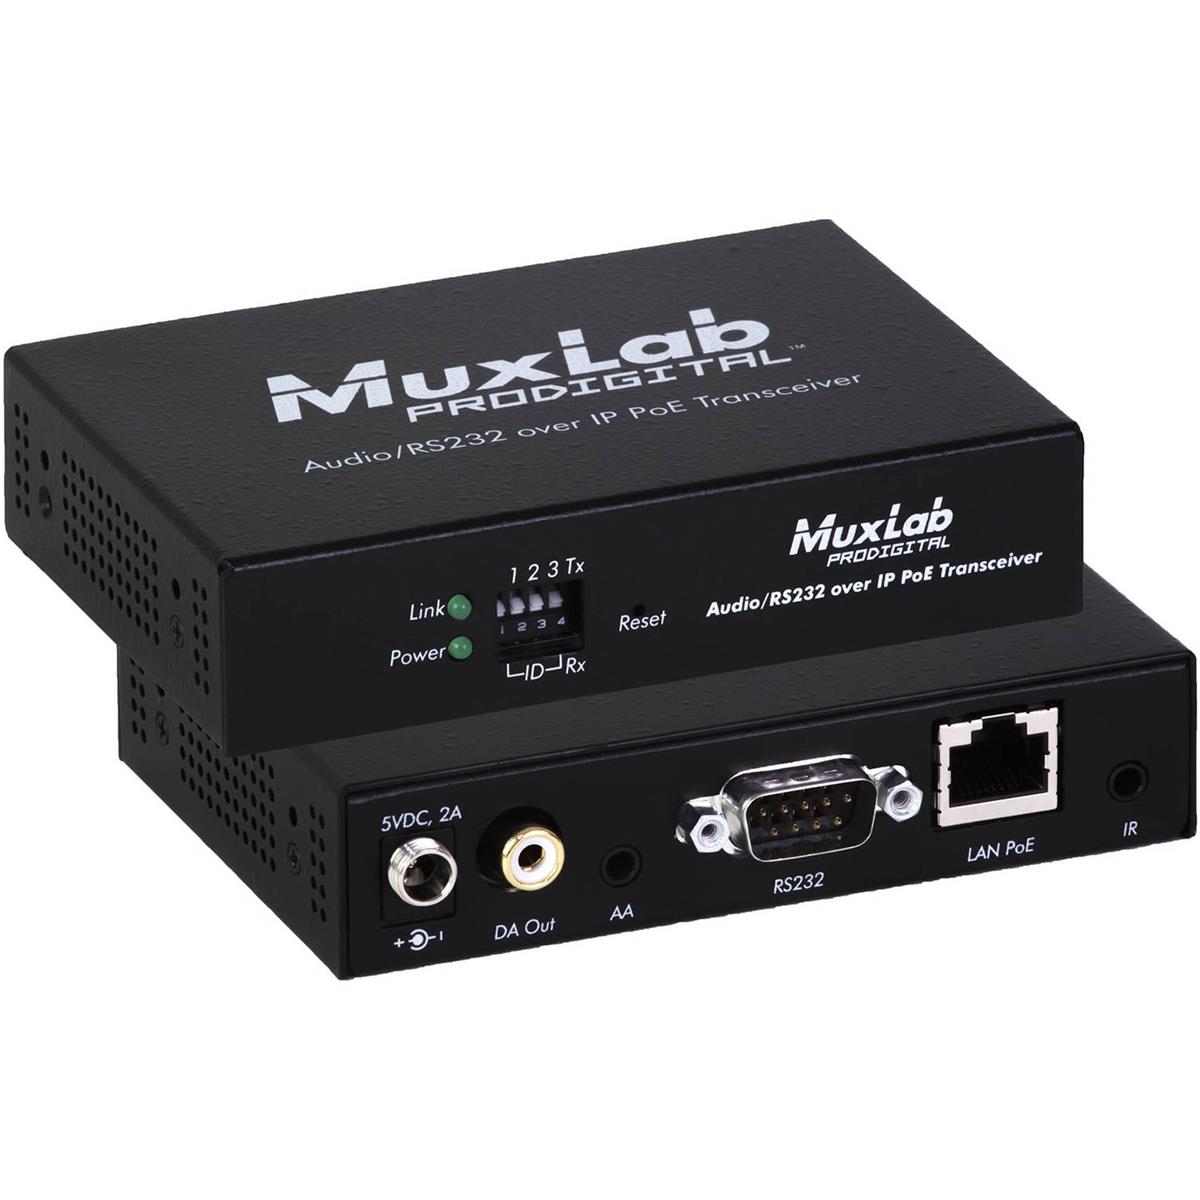 Image of Muxlab MuxLab Audio/RS232/IR Over IP Tranceiver with PoE